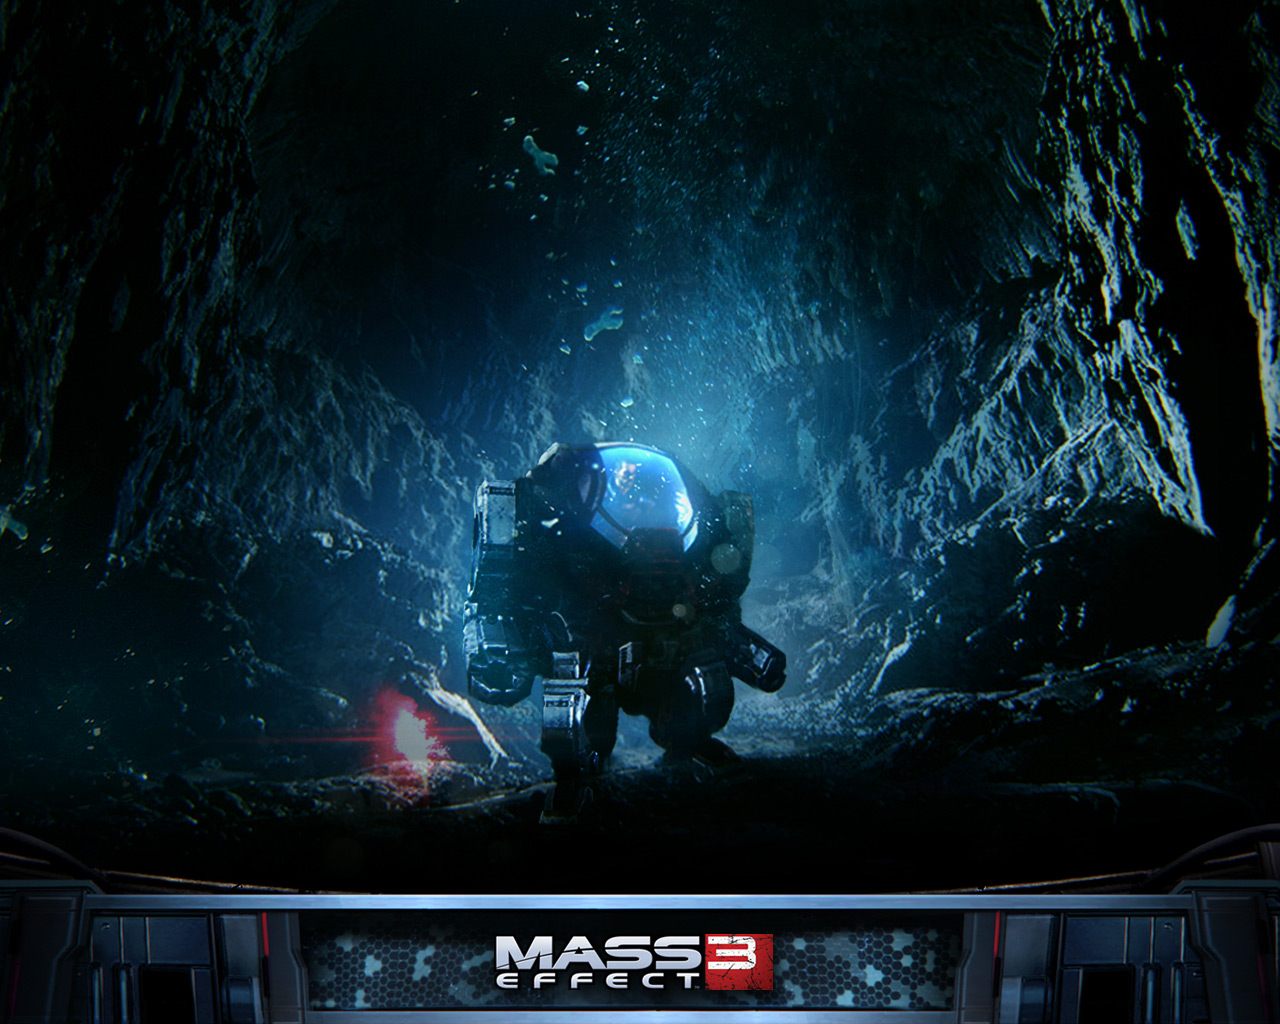 Mass Effect 3: Omega